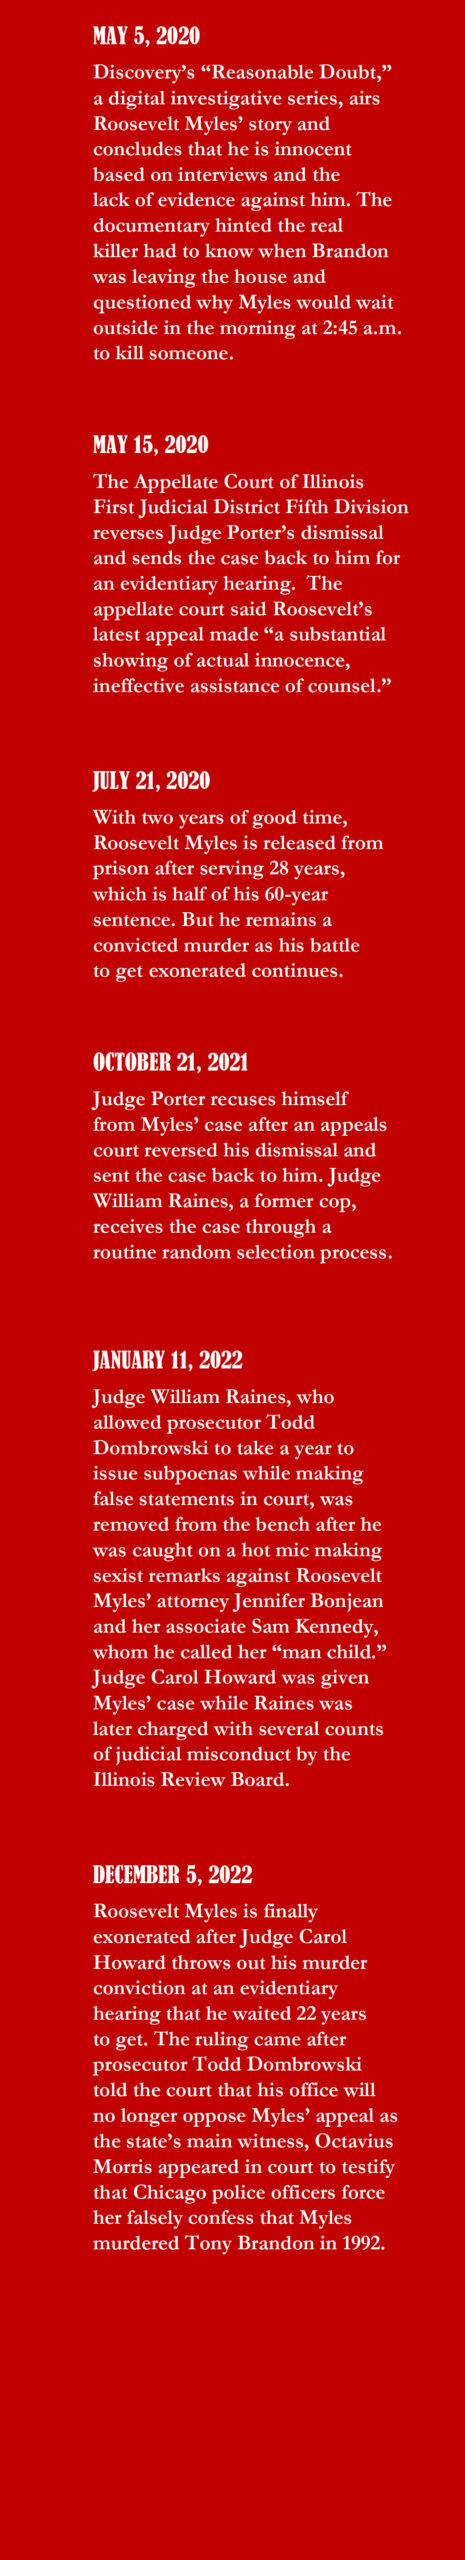 Roosevelt Myles Timeline2A scaled